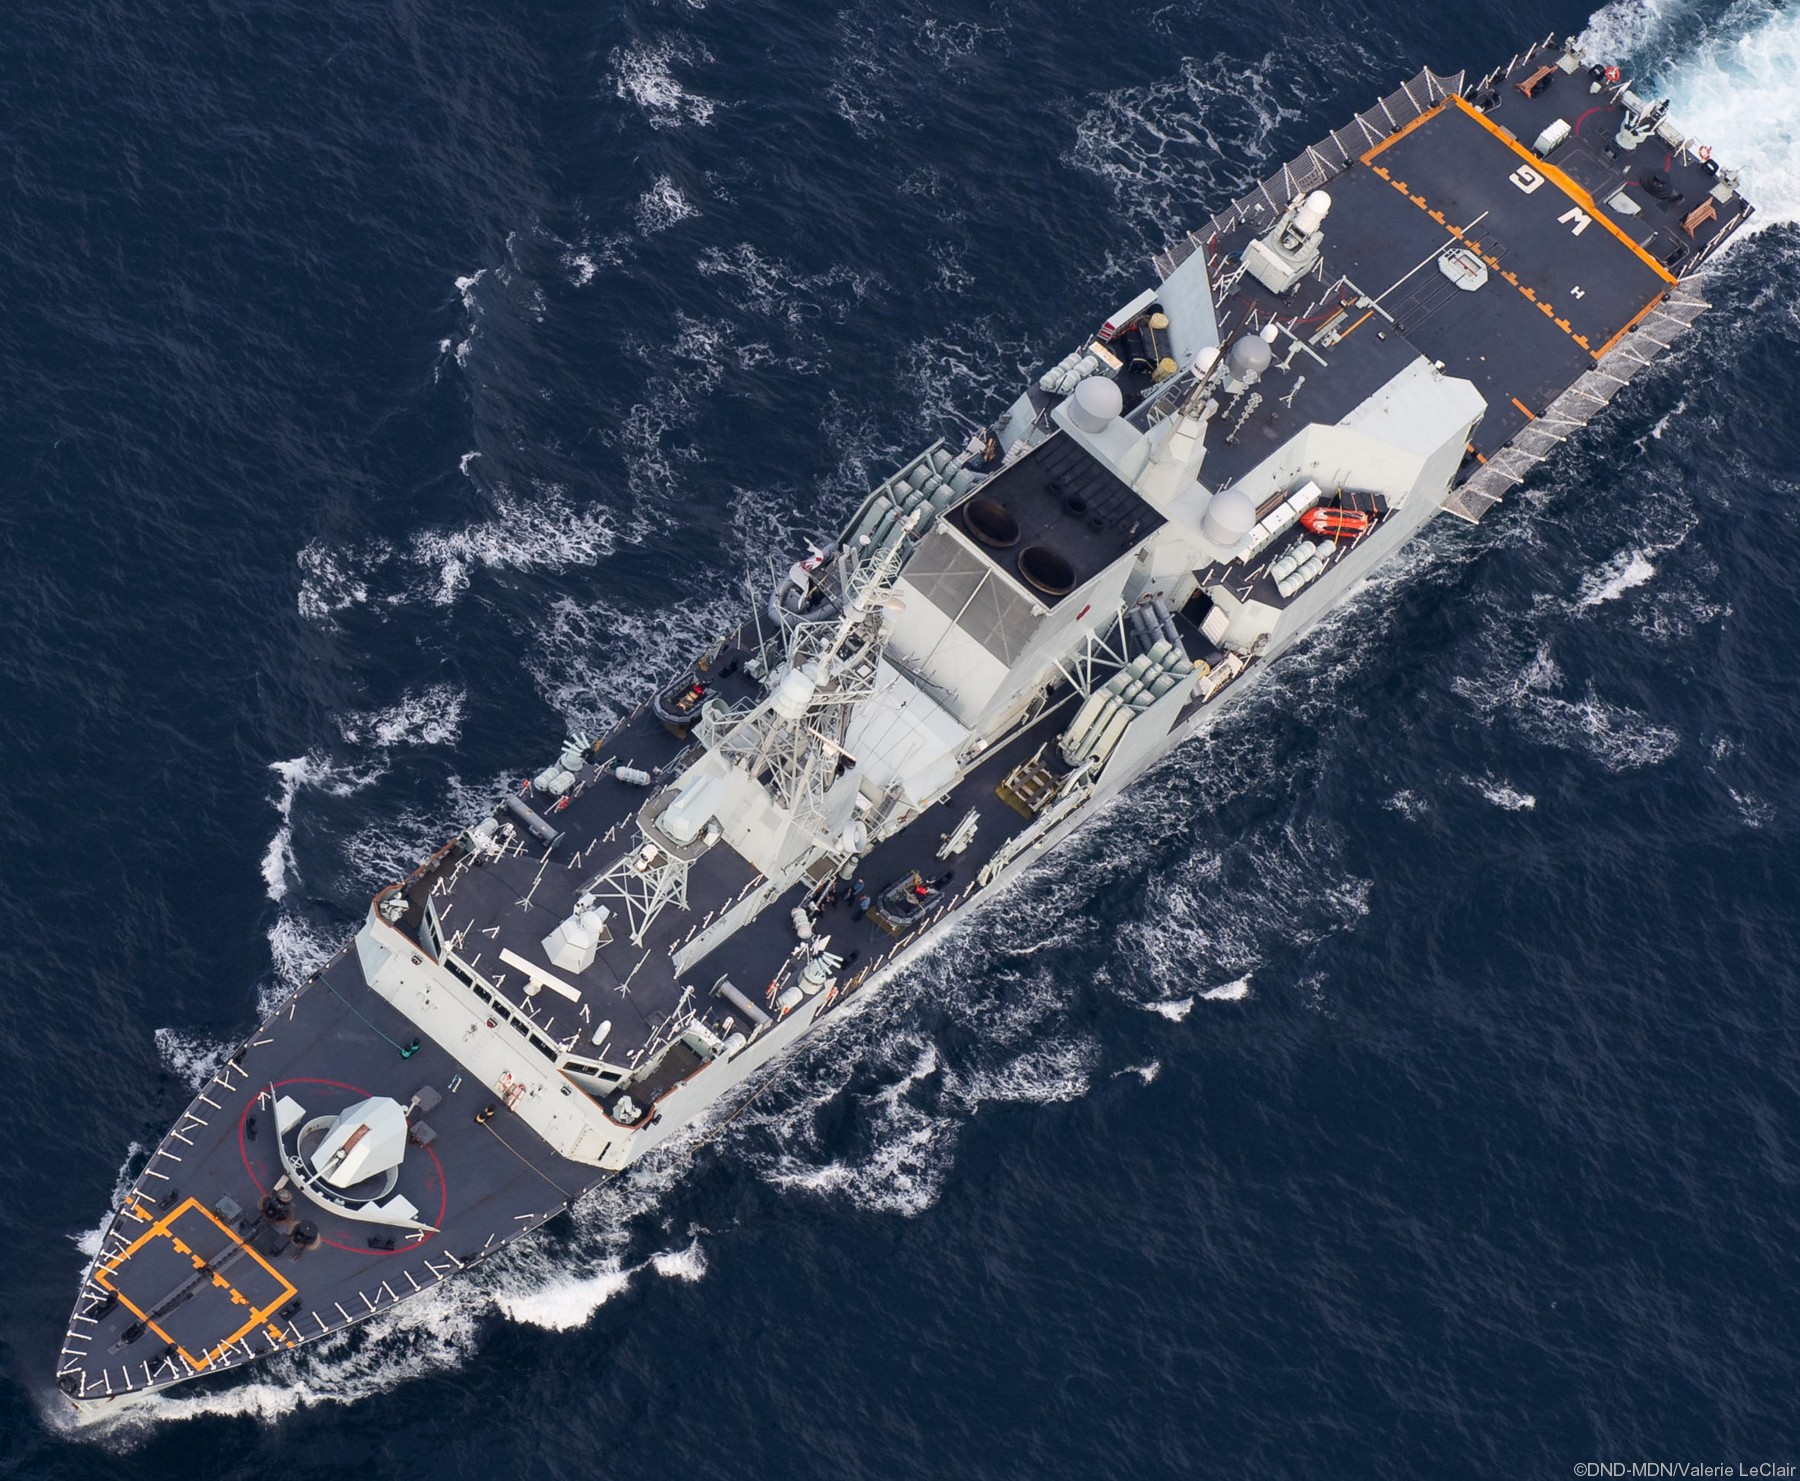 ffh-338 hmcs winnipeg halifax class helicopter patrol frigate ncsm royal canadian navy 02